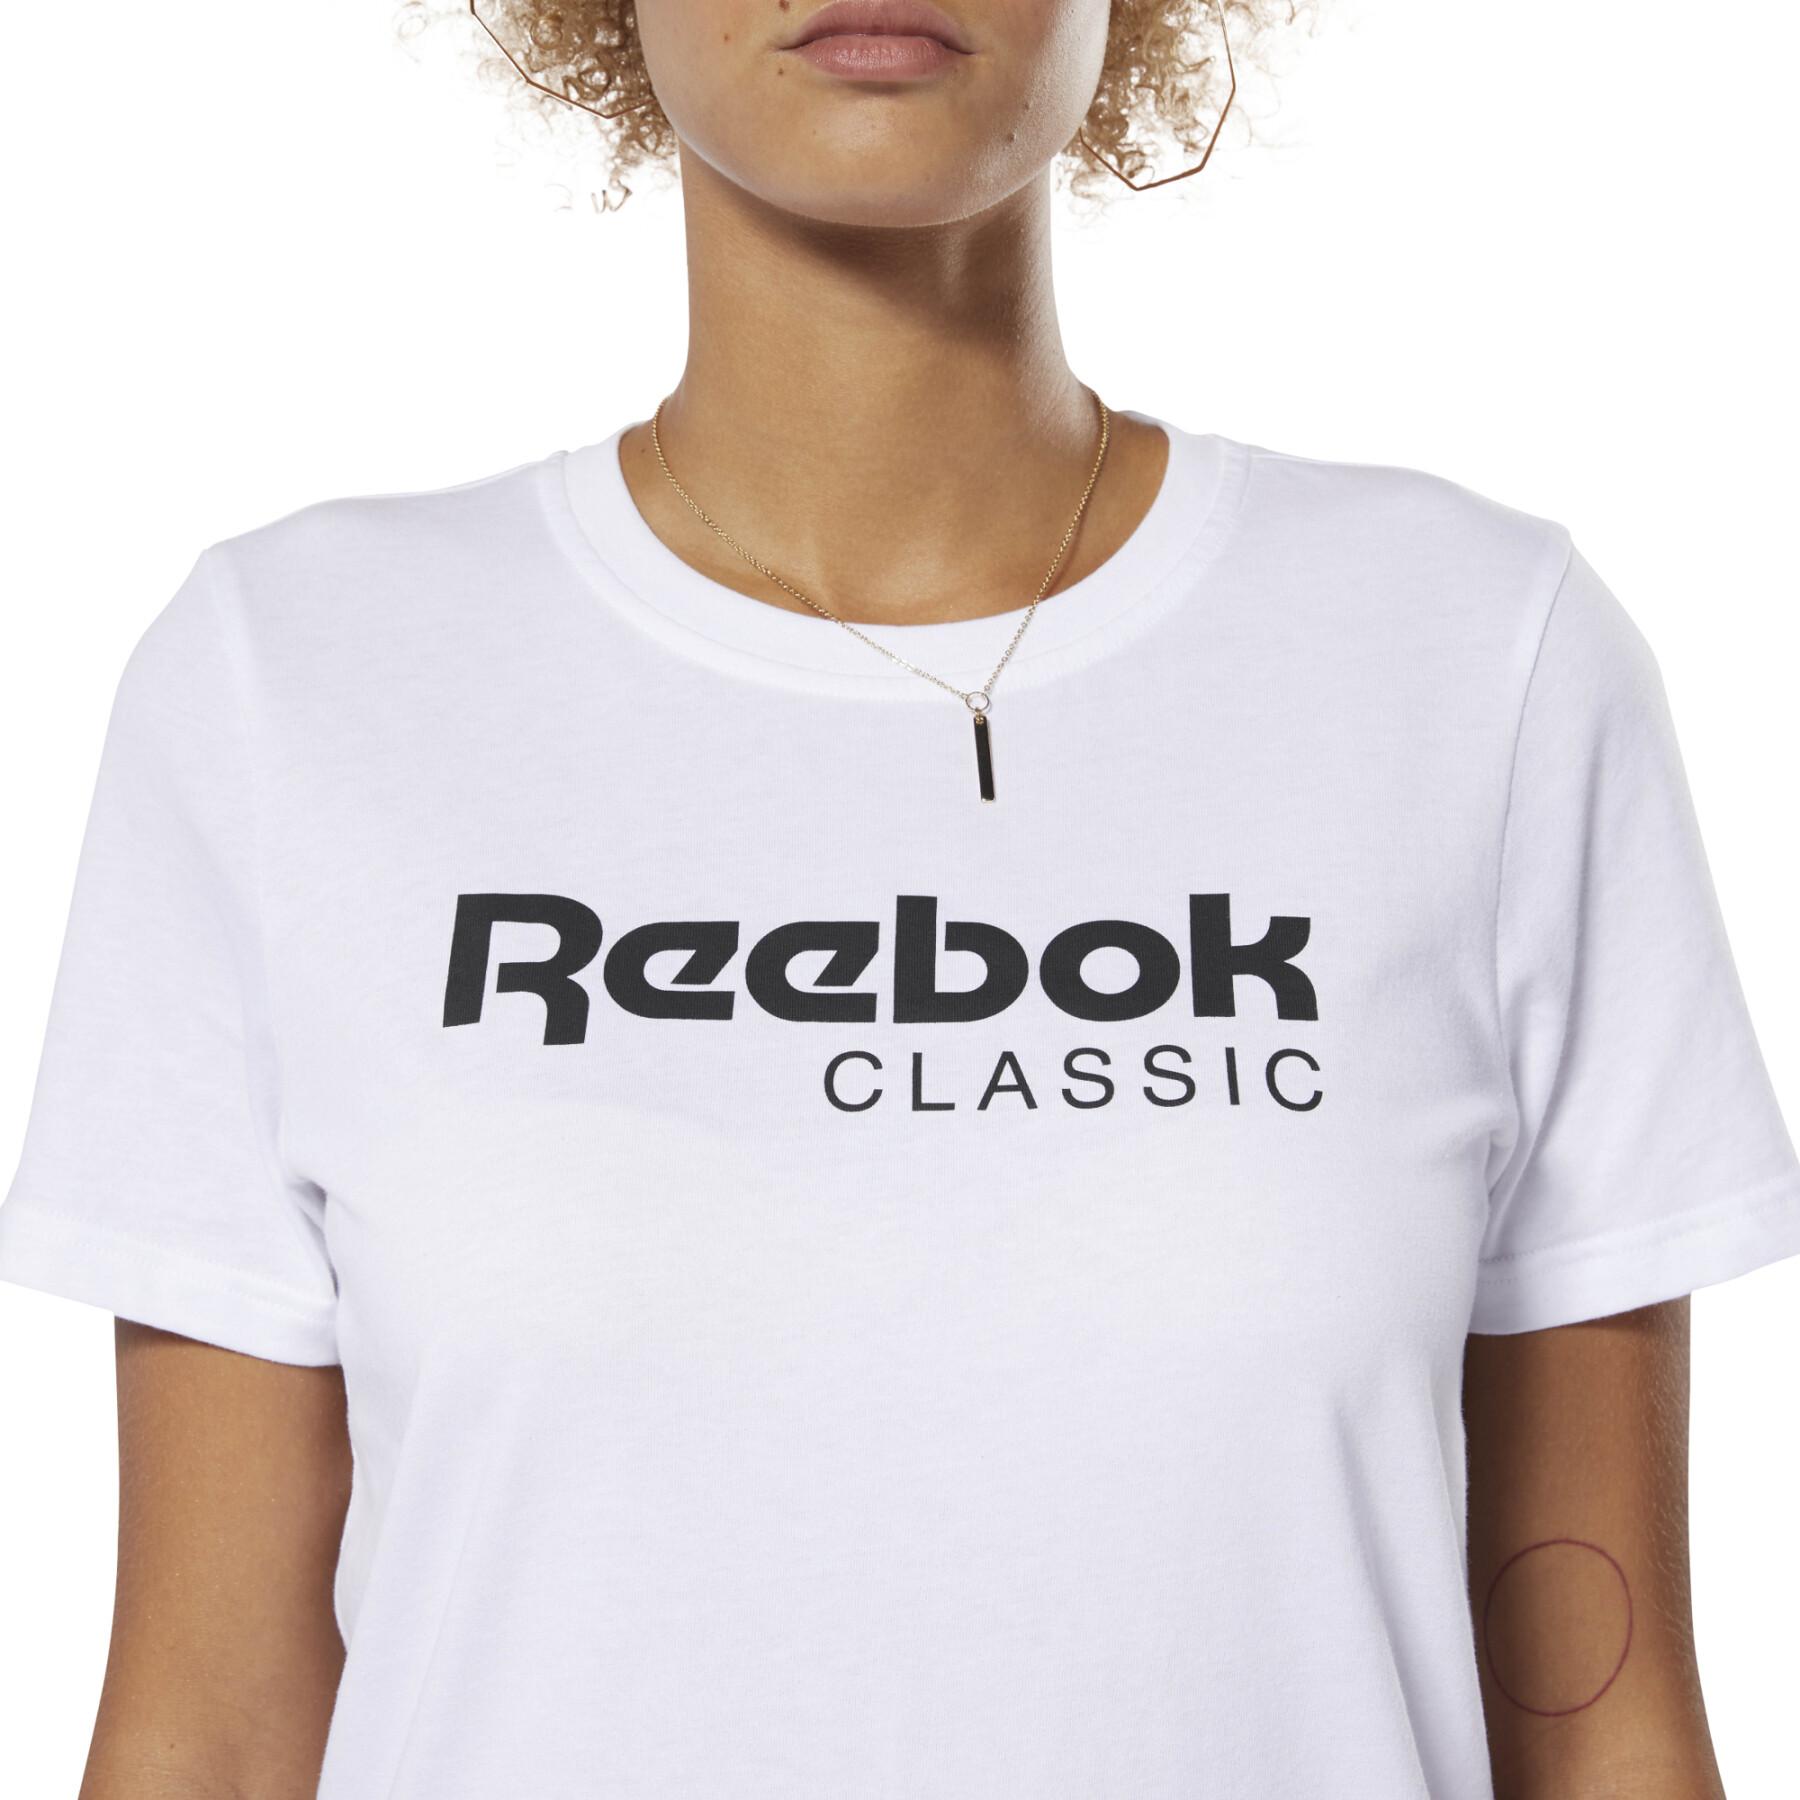 Camiseta dos clássicos femininos Reebok